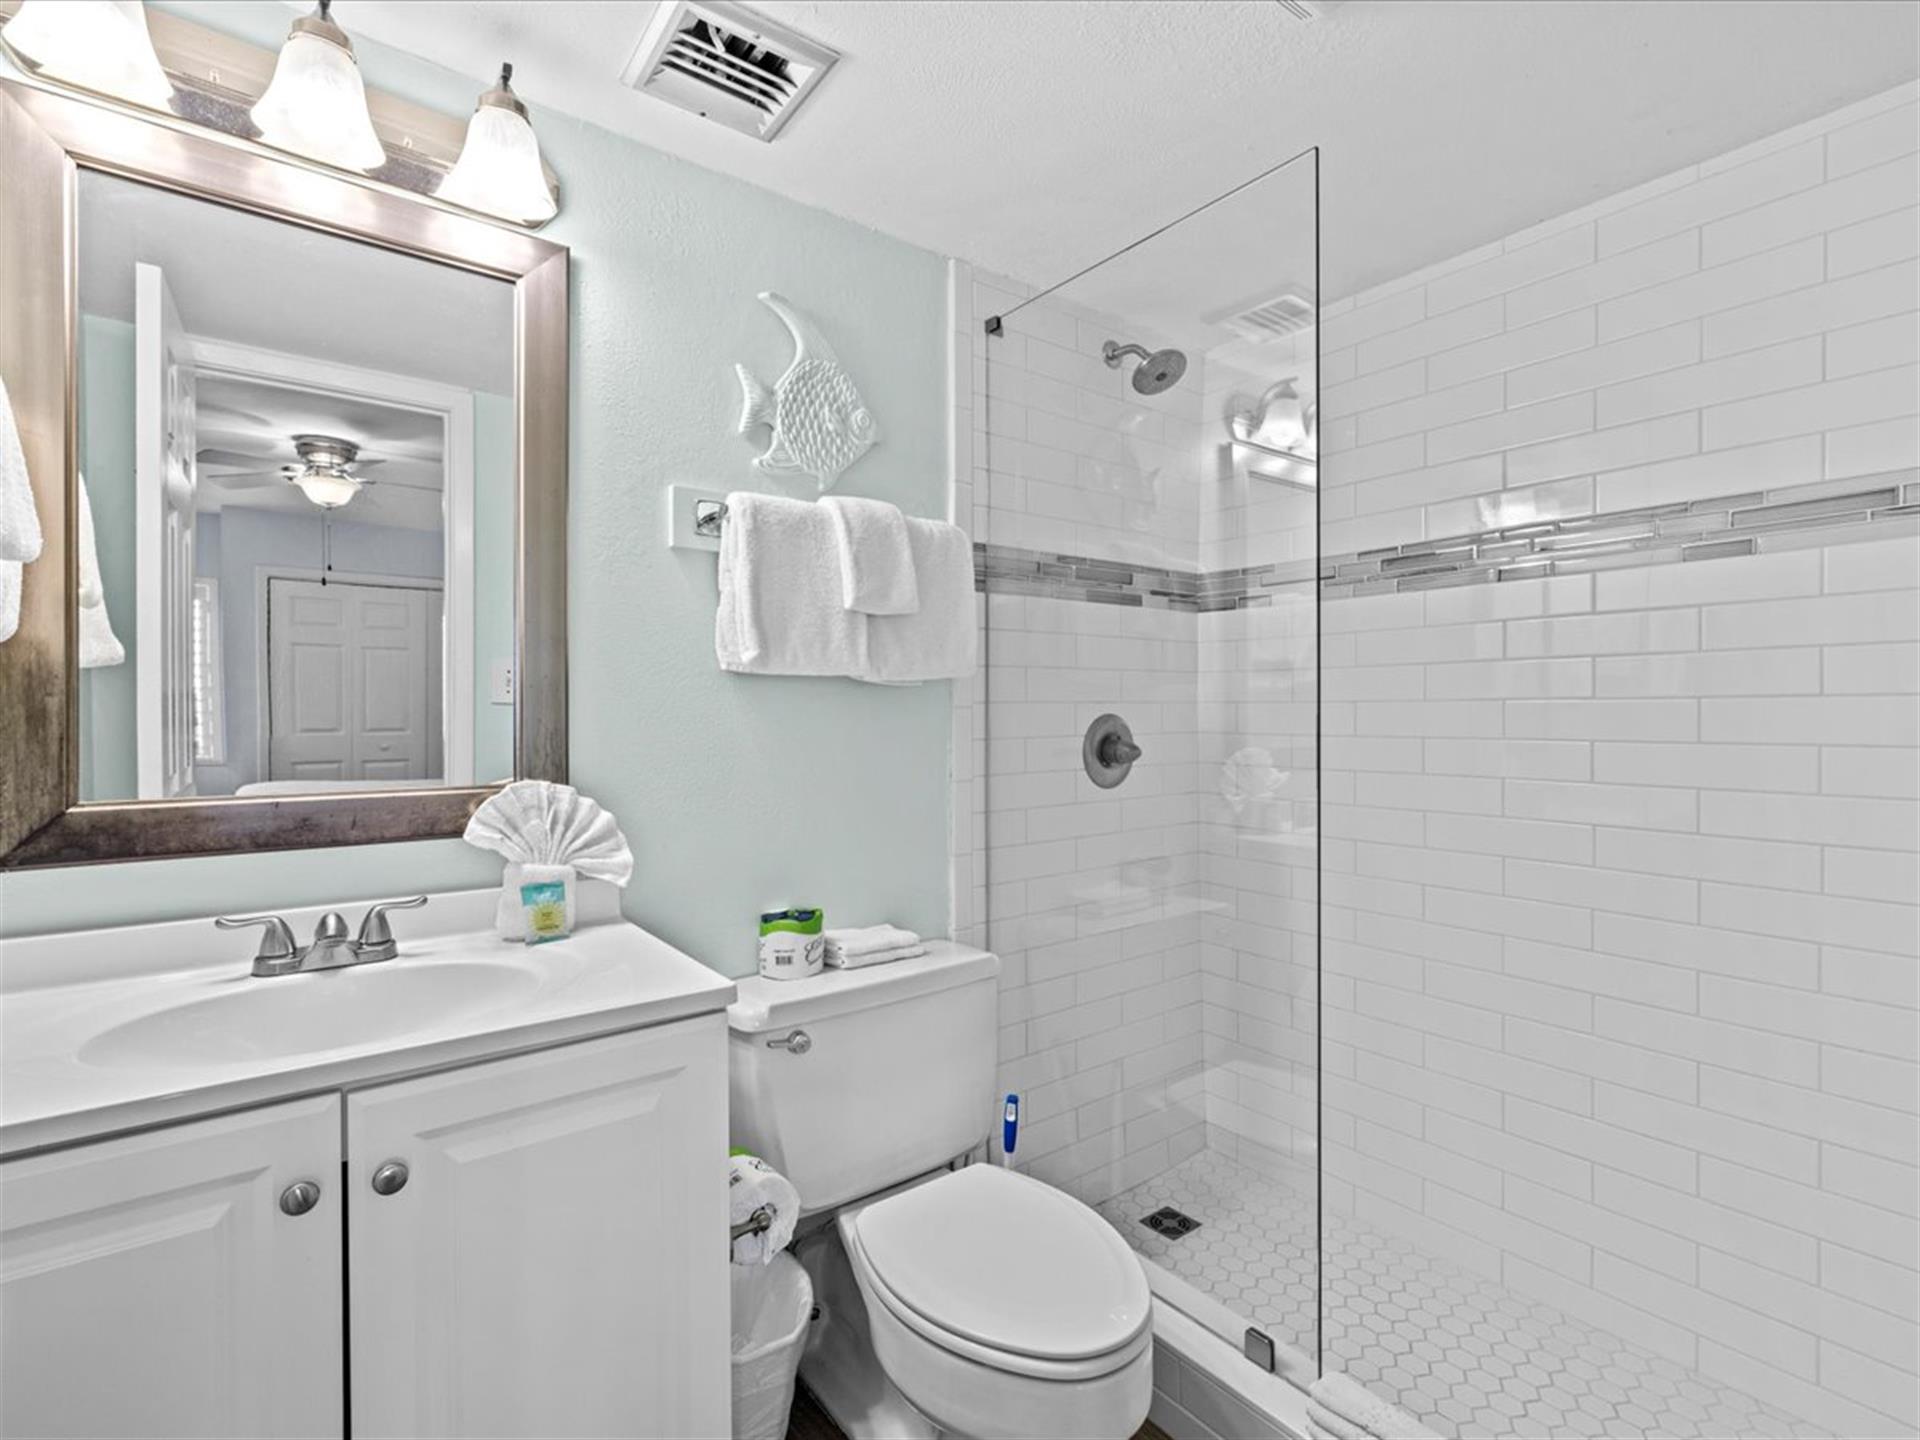 HSRC 307 Master Bathroom With WalkIn Shower